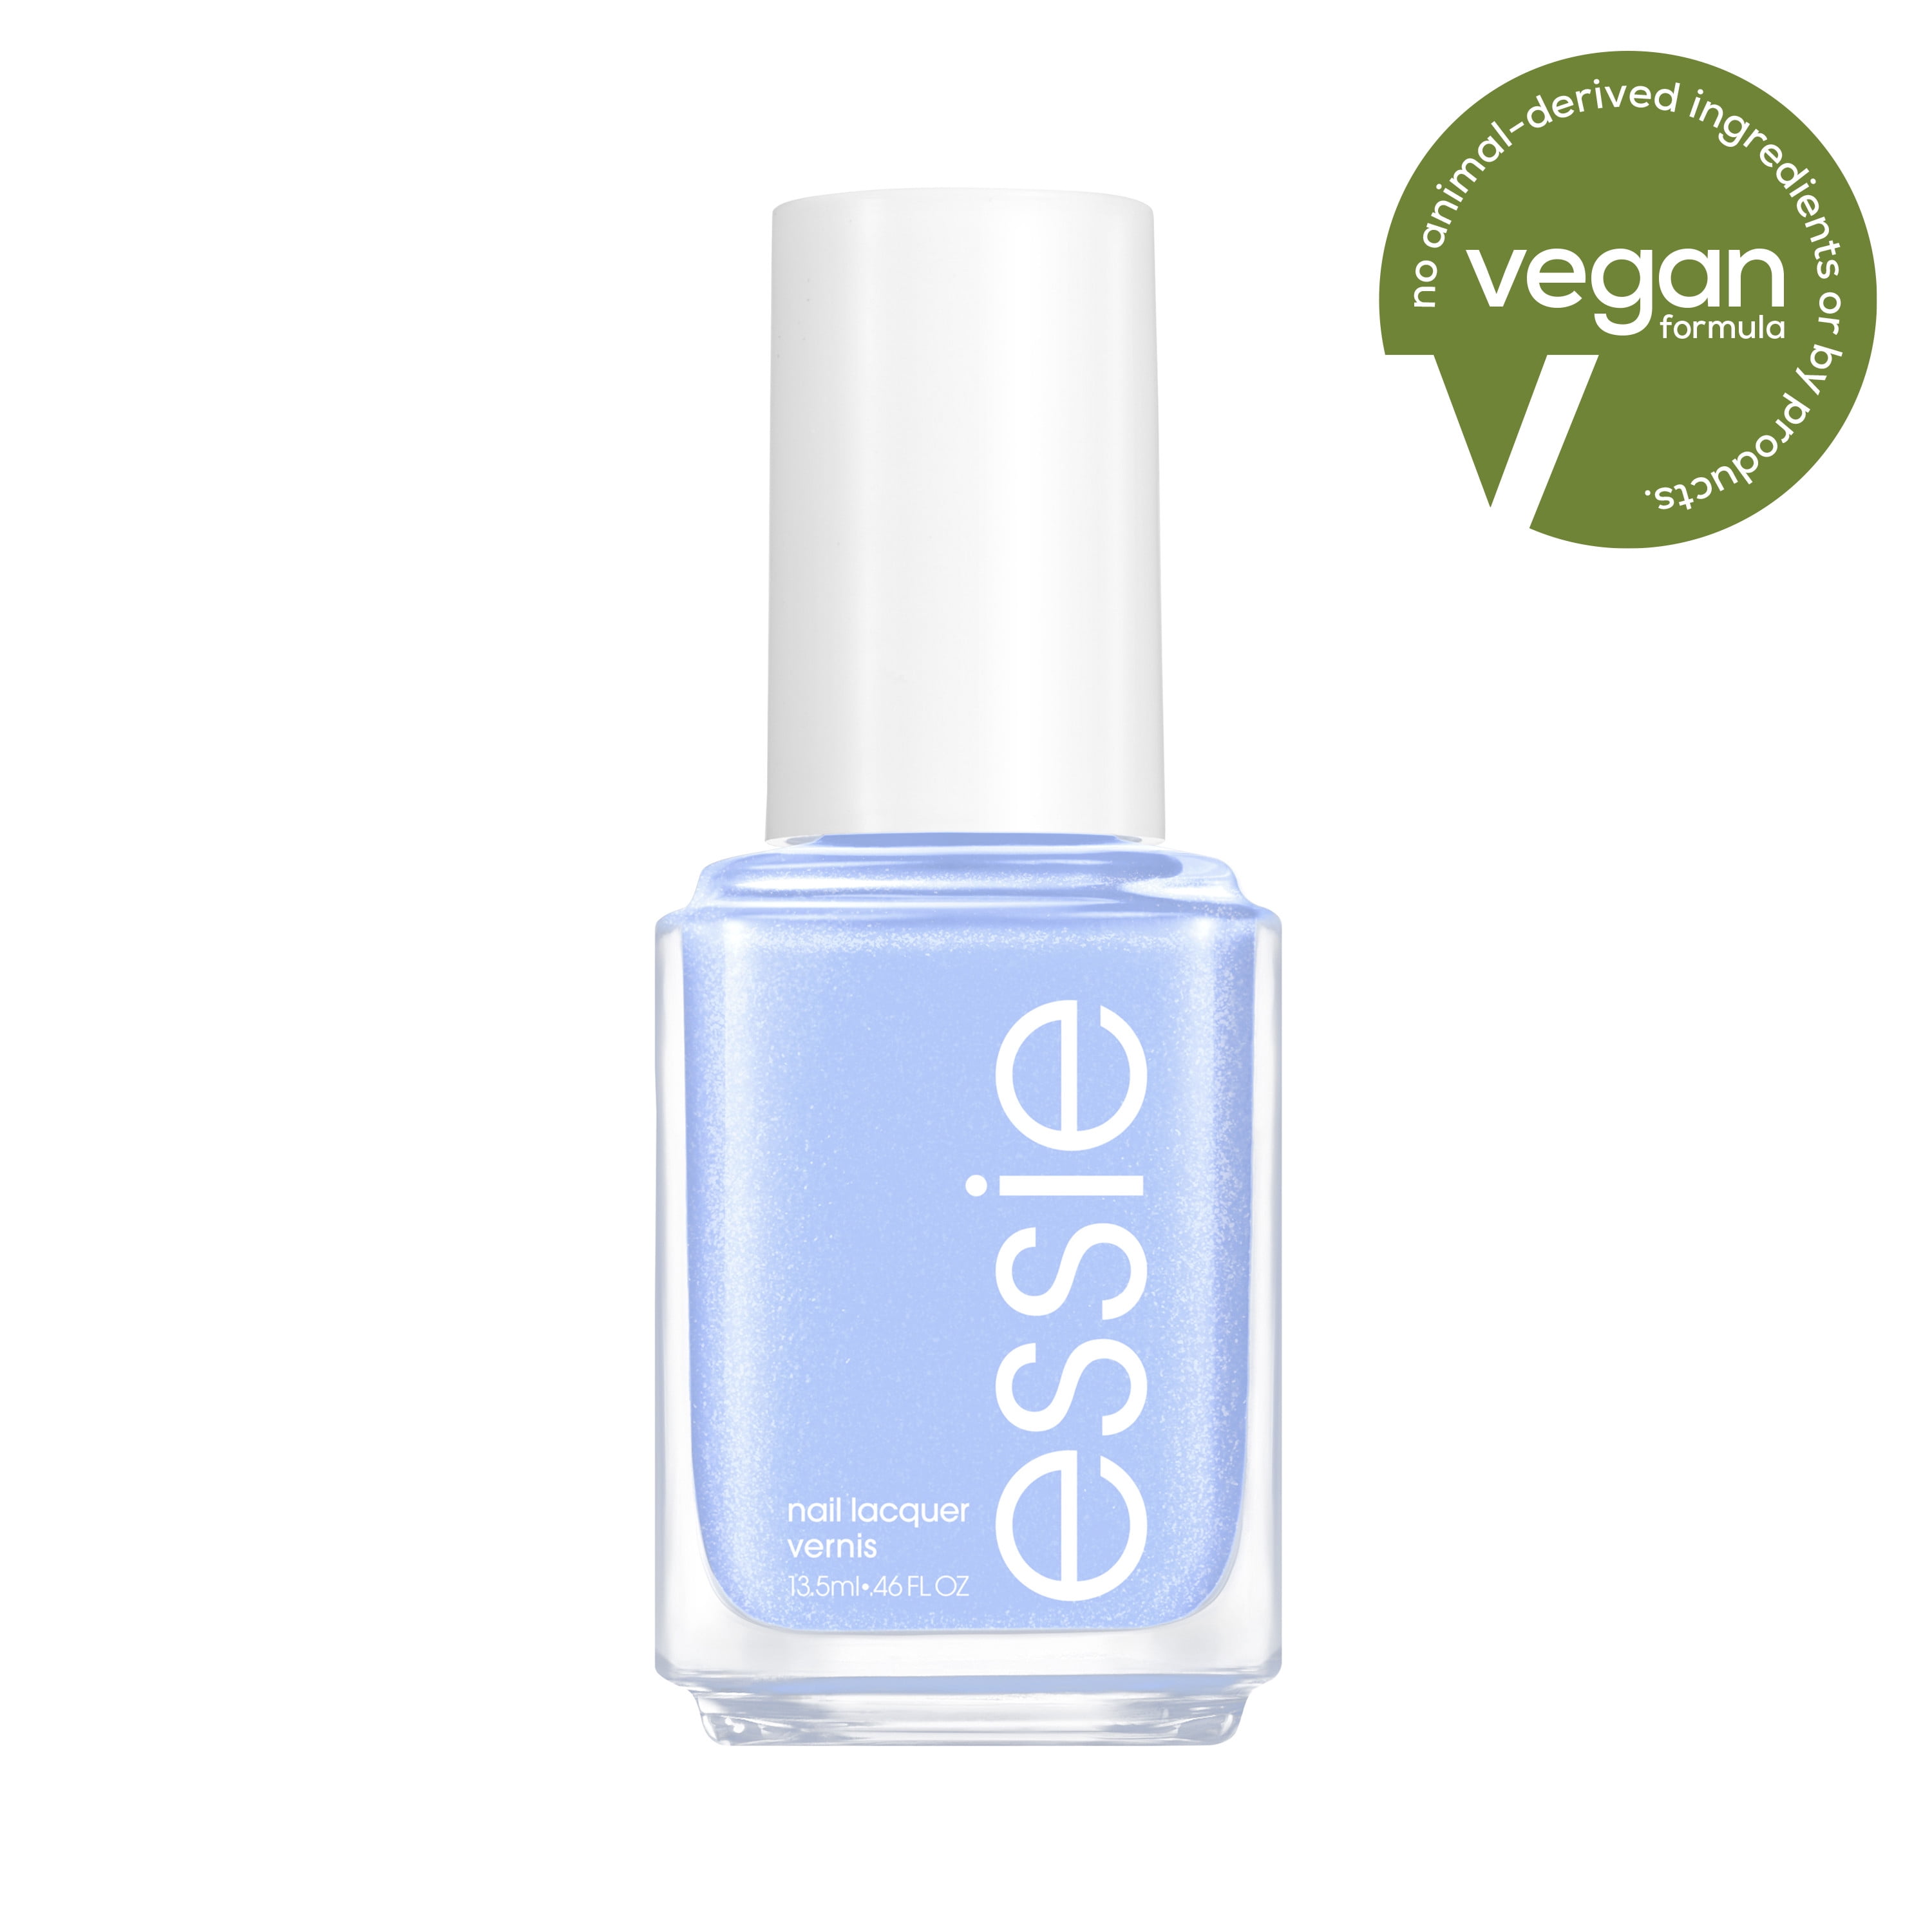 essie salon-quality nail polish, 8-free vegan, cornflower blue, Bikini So Teeny, 0.46 fl oz